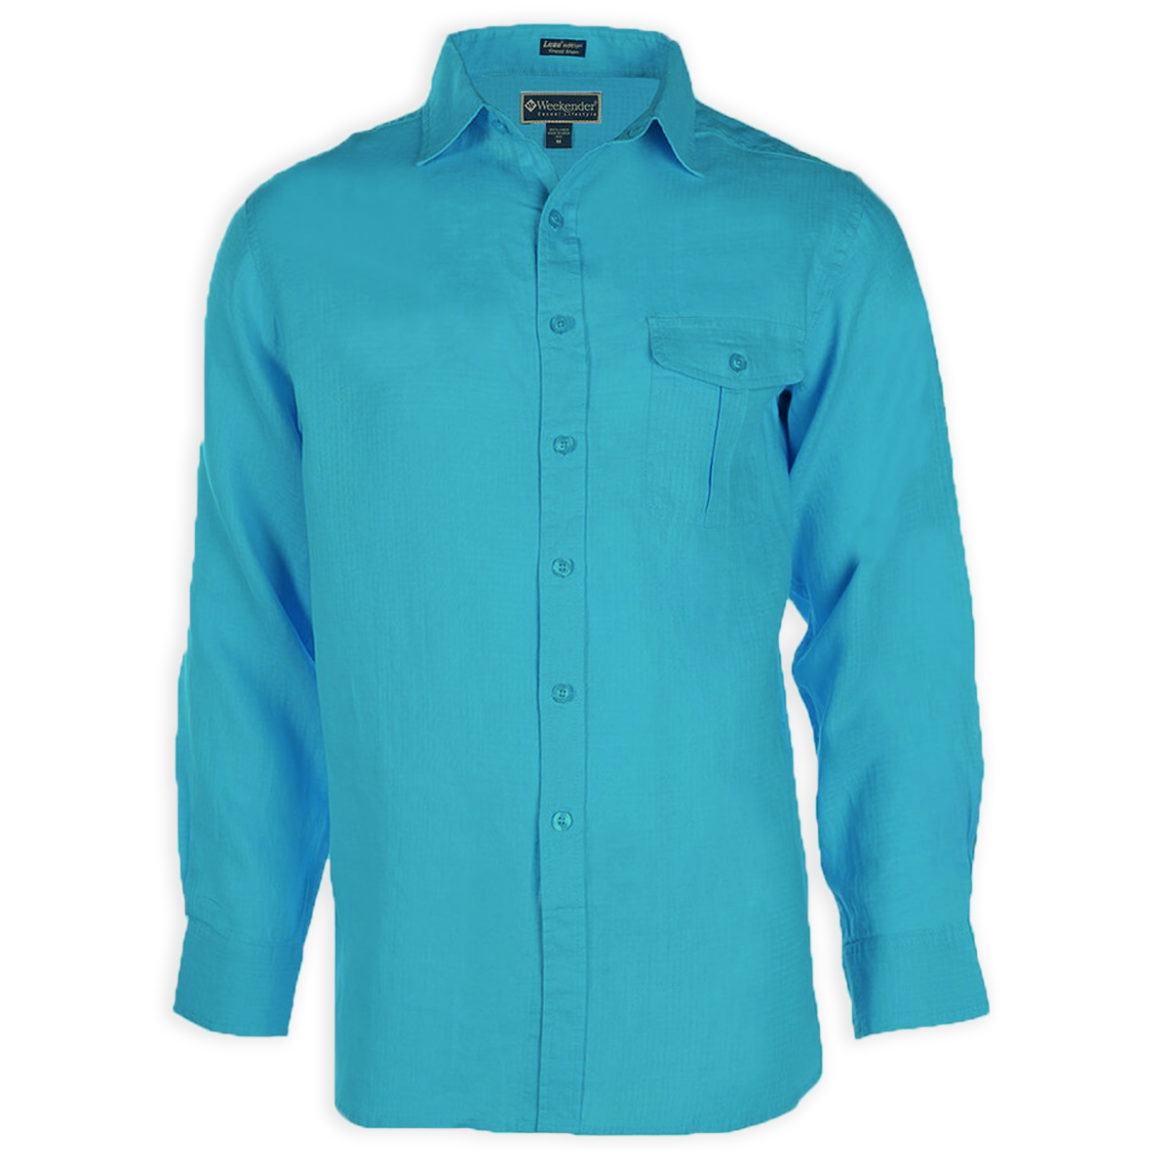 Weekender Men's Long Sleeve Shirt-Cook Islands -Turquoise